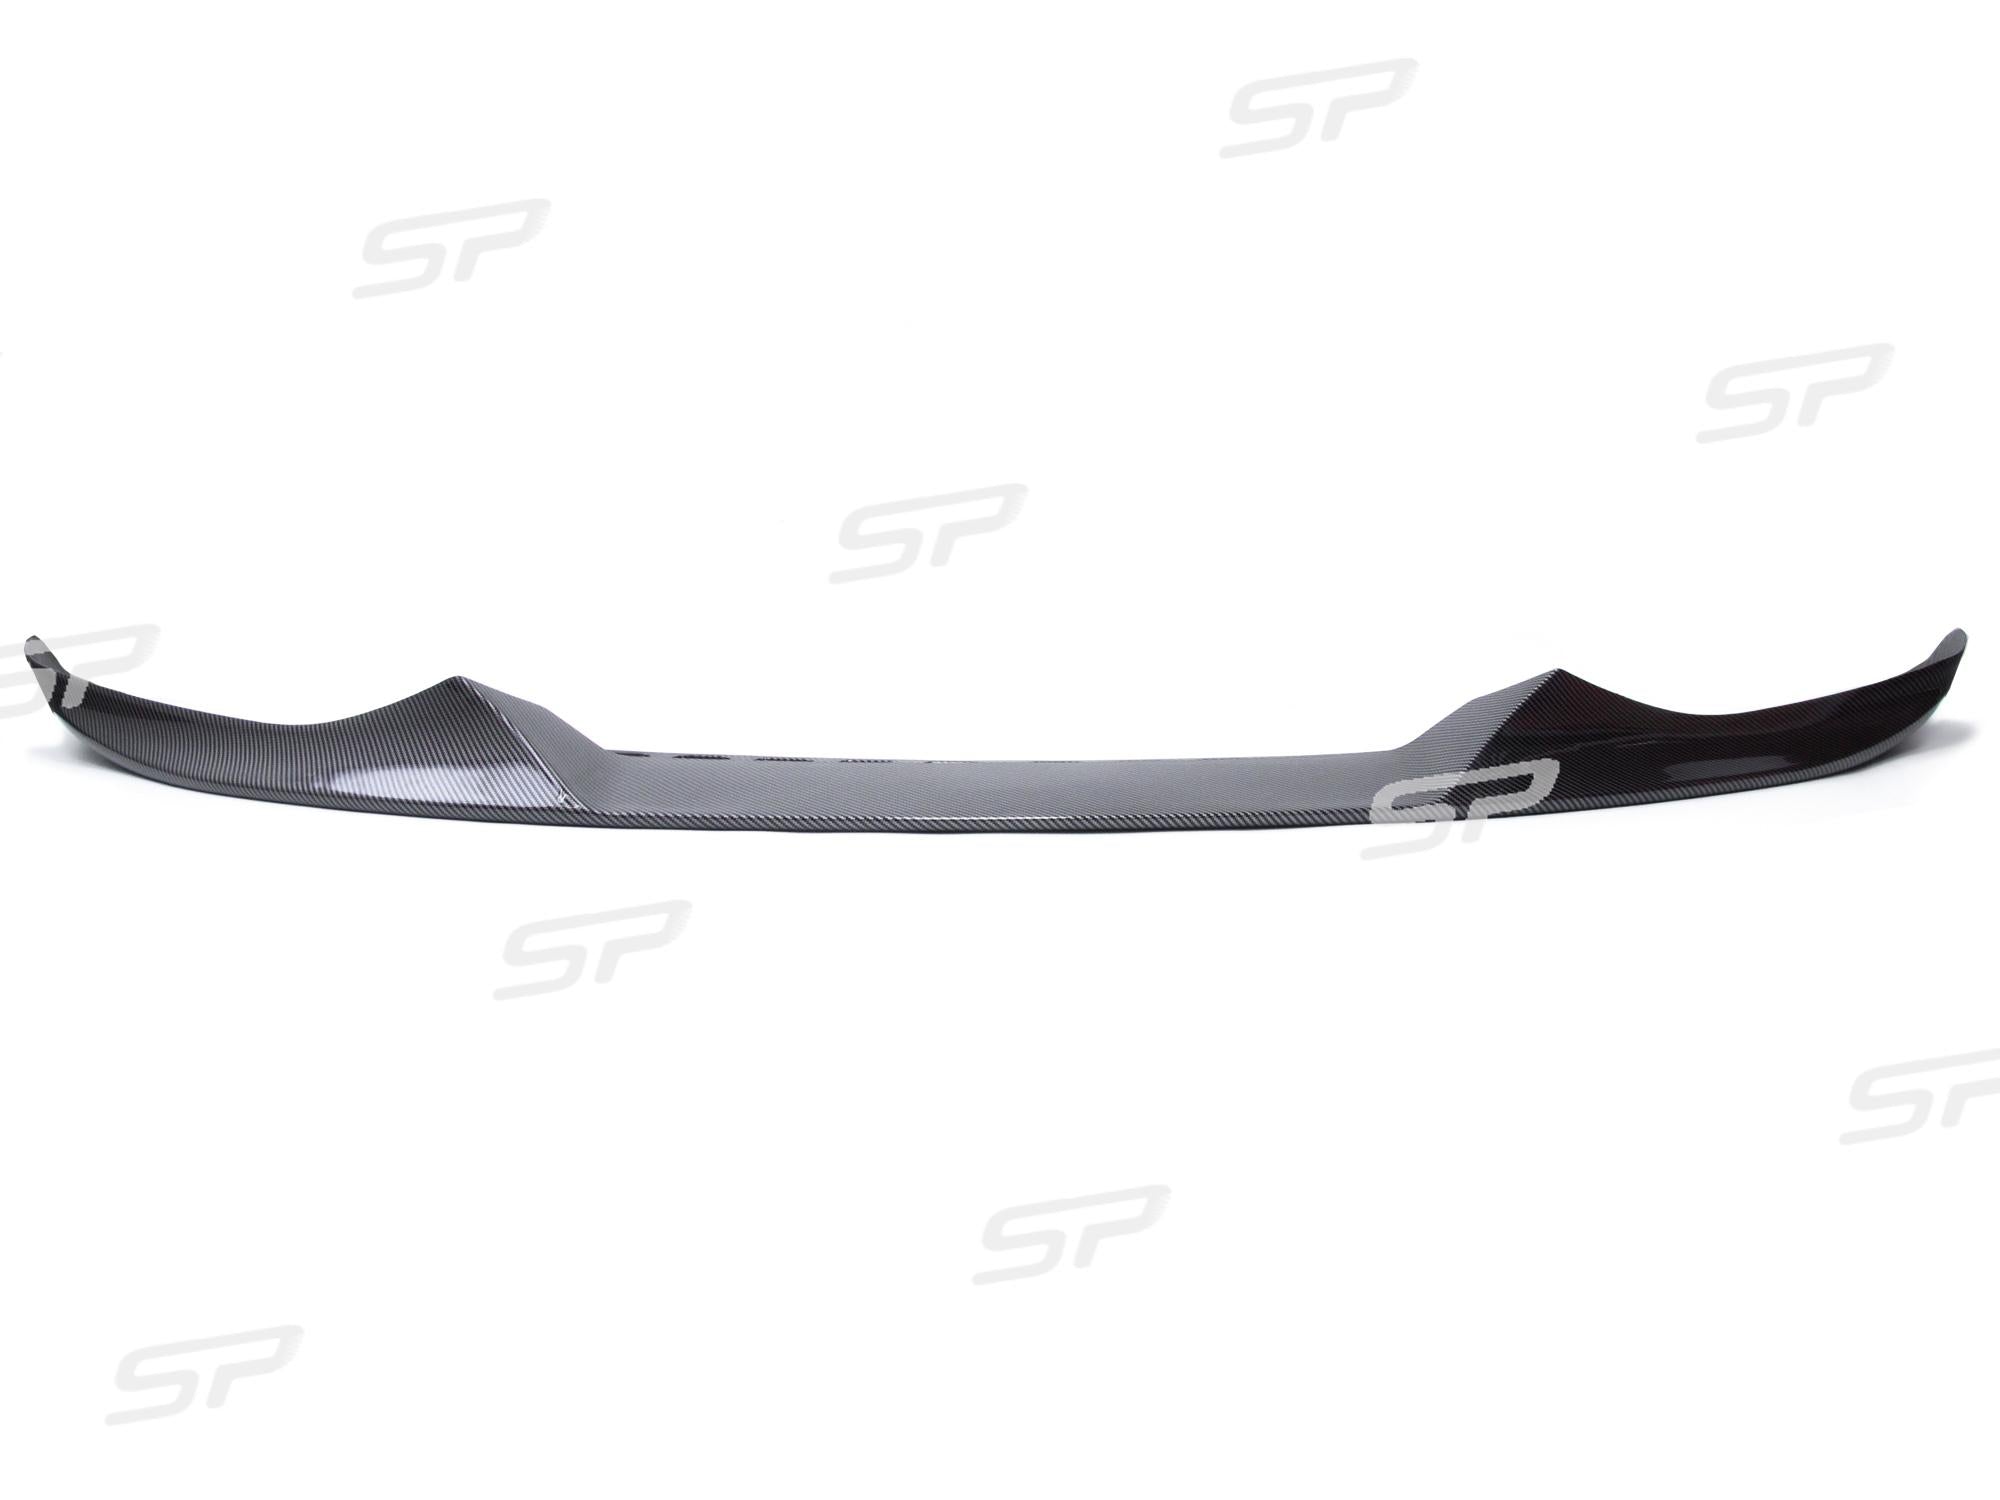 Diffusor Heckdiffusor + Front Spoiler Lippe Stoßstange Carbon Optik für BMW X5 F15 M Paket